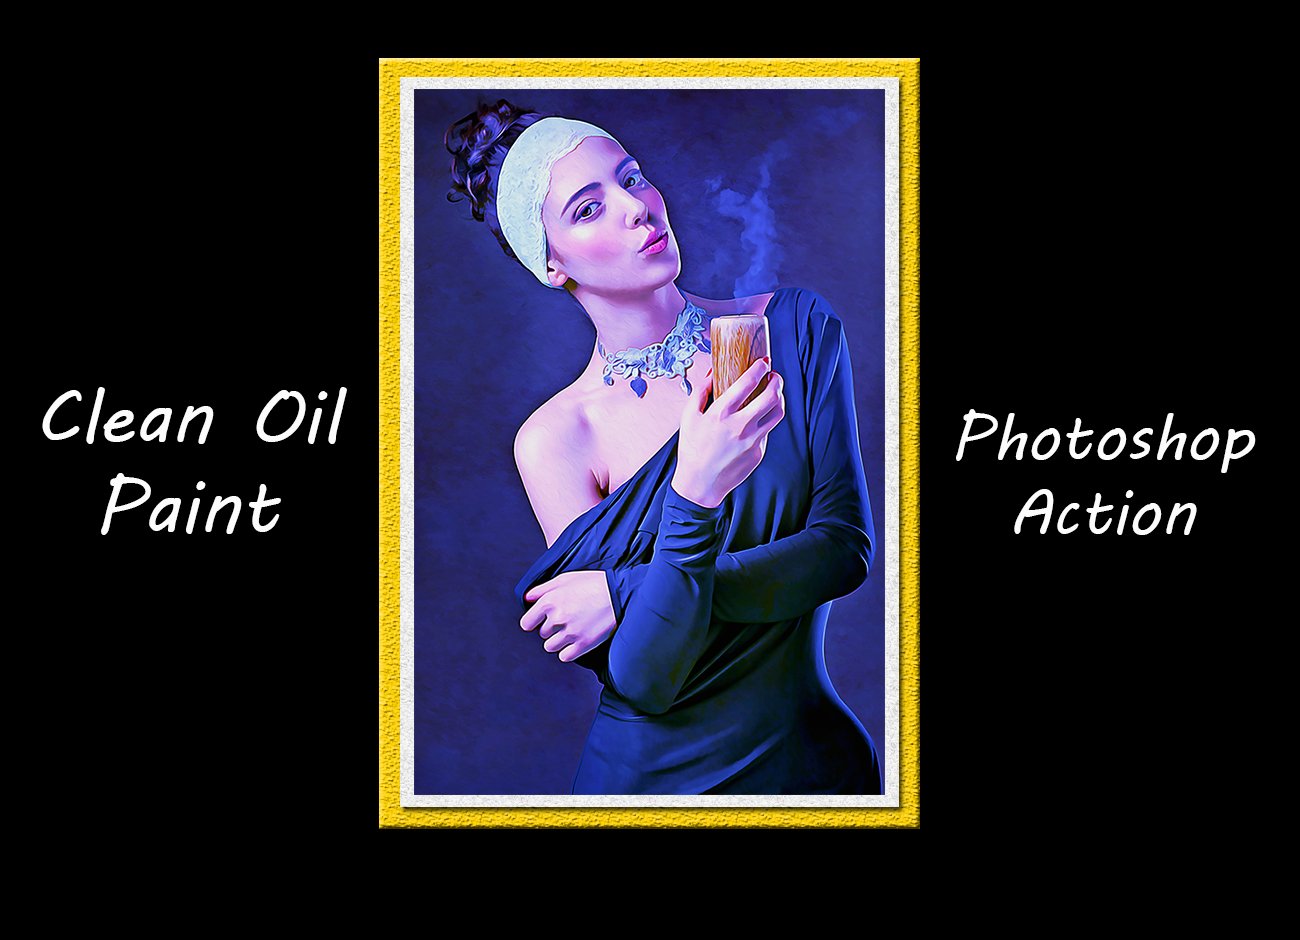 Clean Oil Paint Photoshop Actioncover image.